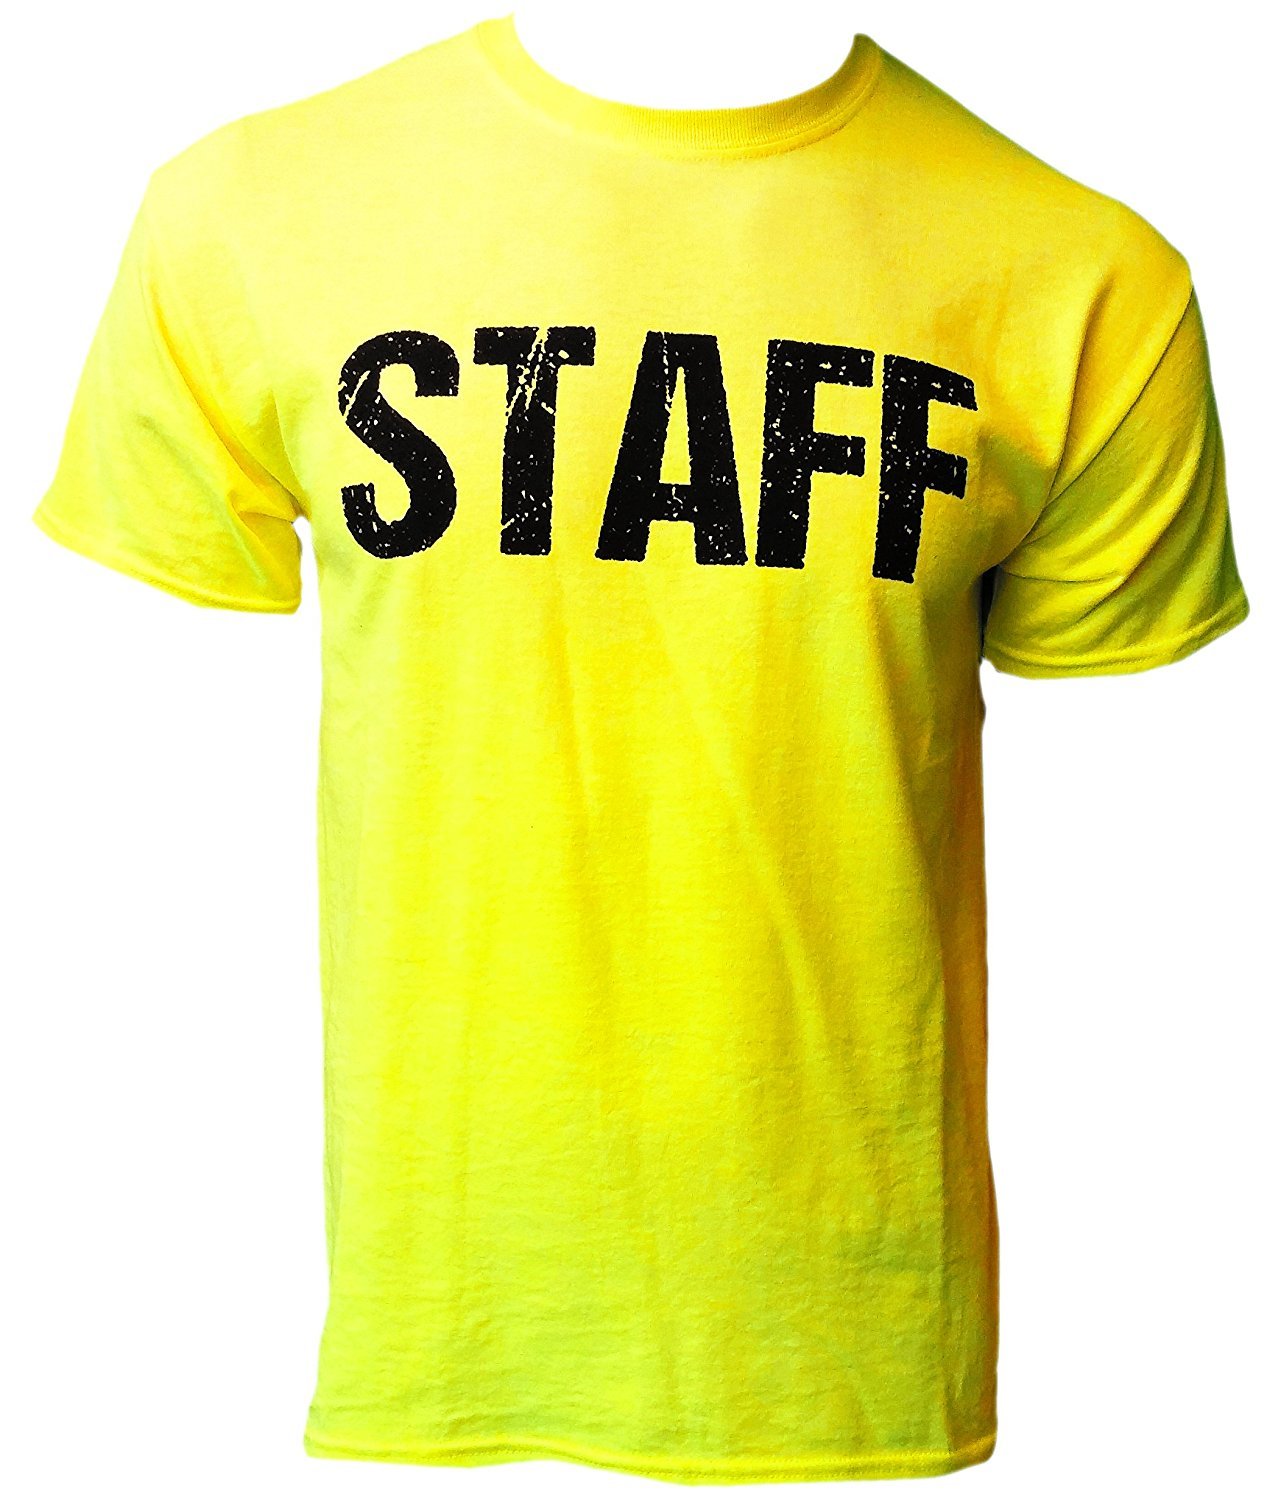 Bright Yellow Staff T-Shirt Front & Back Print Mens Event Shirt Tee | eBay